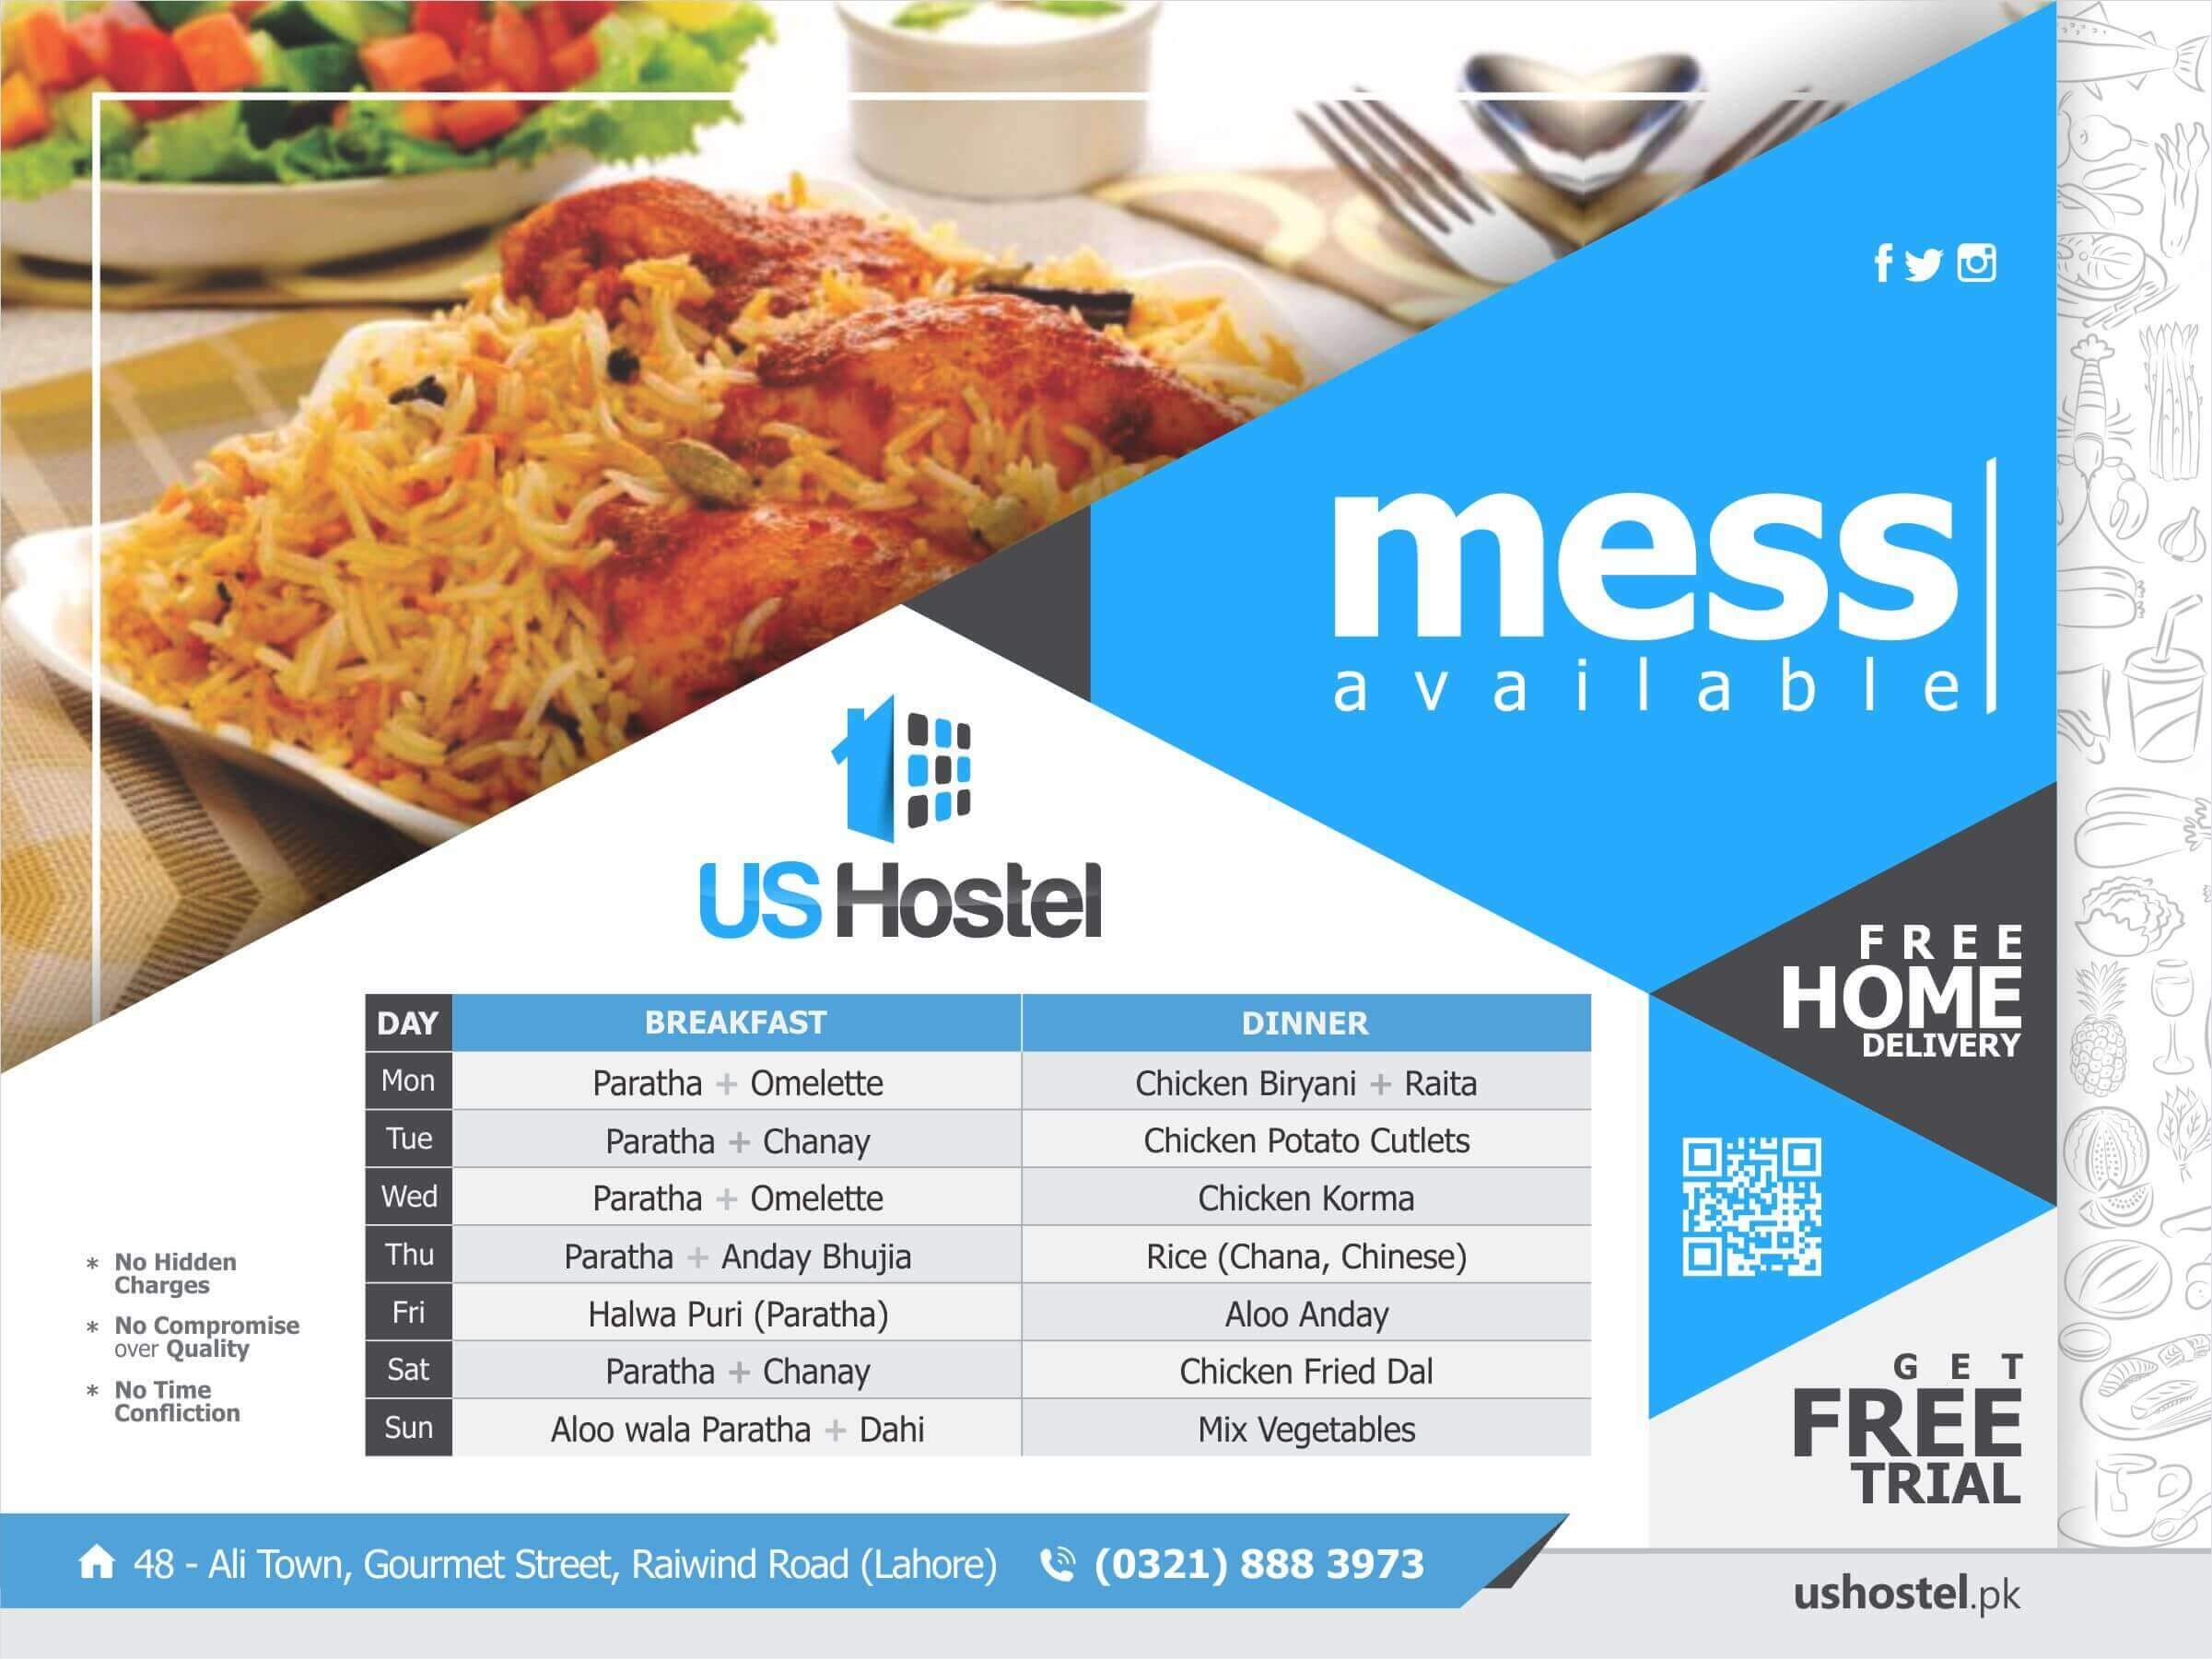 US Hostel Lahore Mess Menu (www.ushostel.pk)